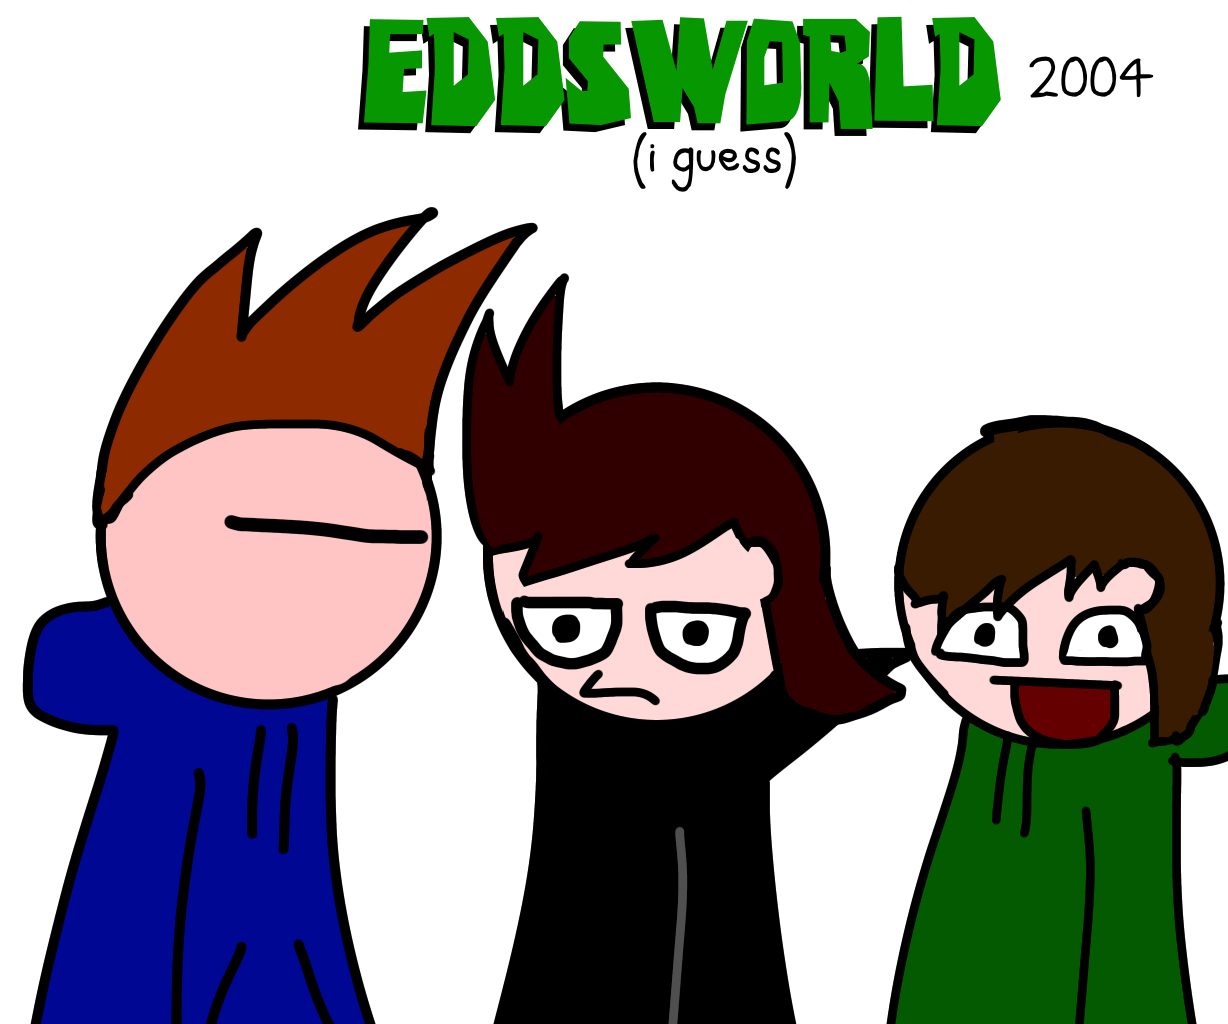 Eddsworld 2004 by EvilSlothSlayerSoSo on DeviantArt